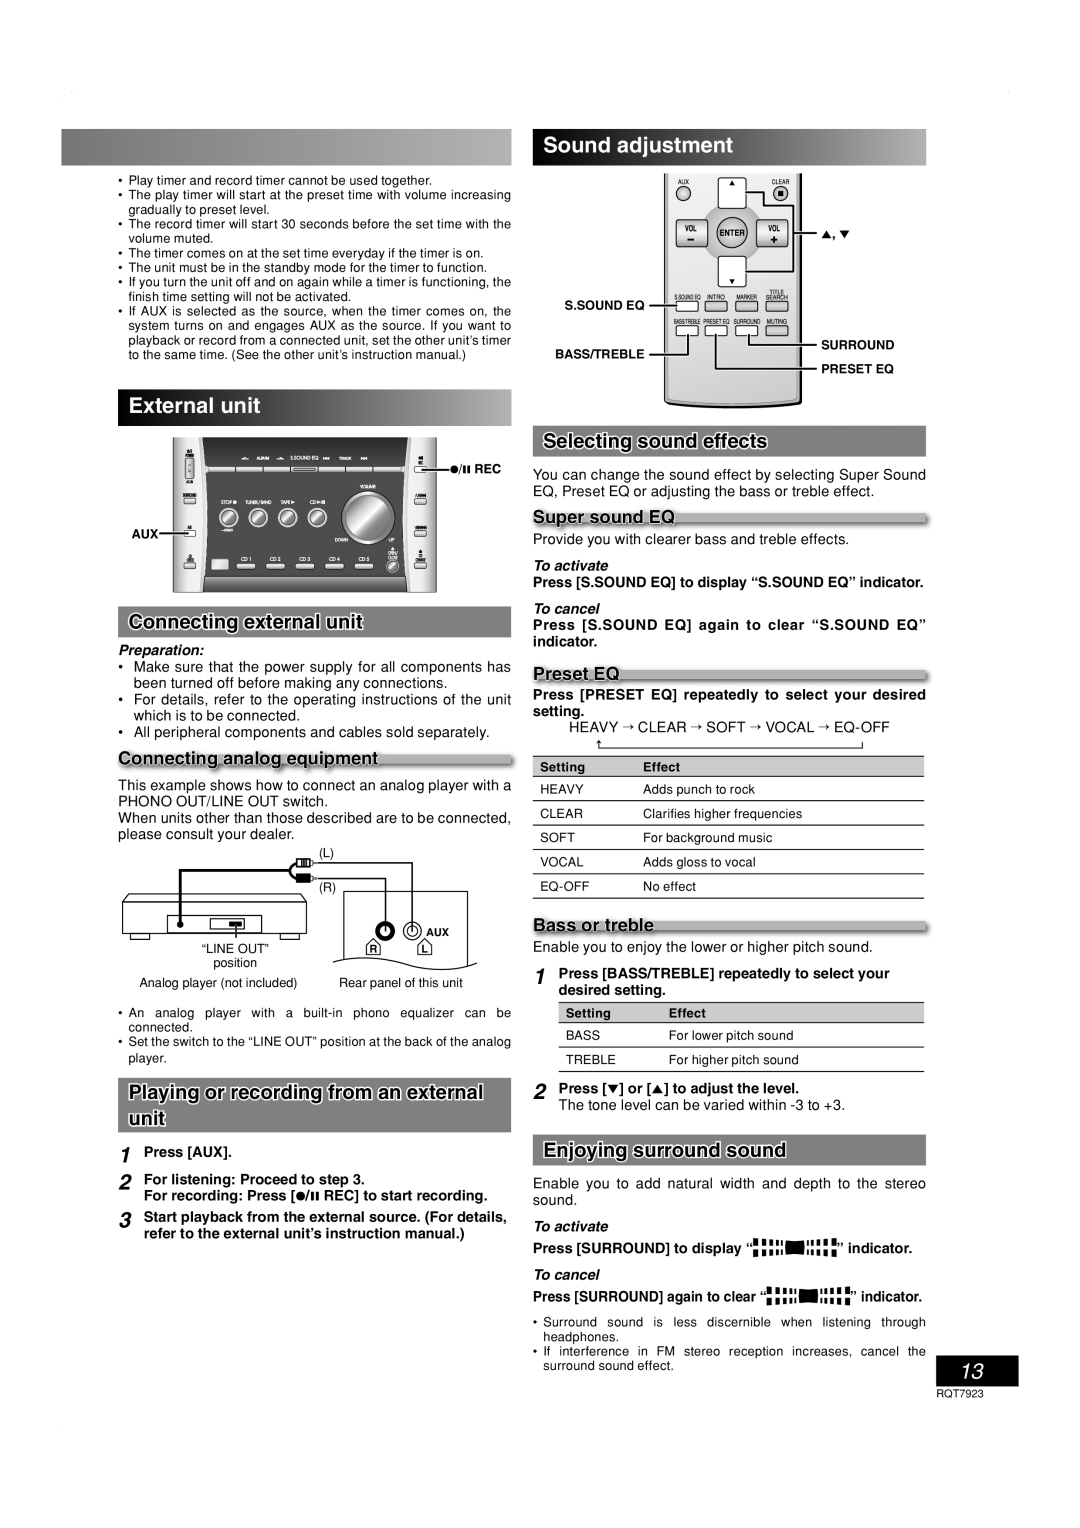 Panasonic SC-PM313 Sound adjustment, External unit, Connecting external unit, Playing or recording from an external unit 